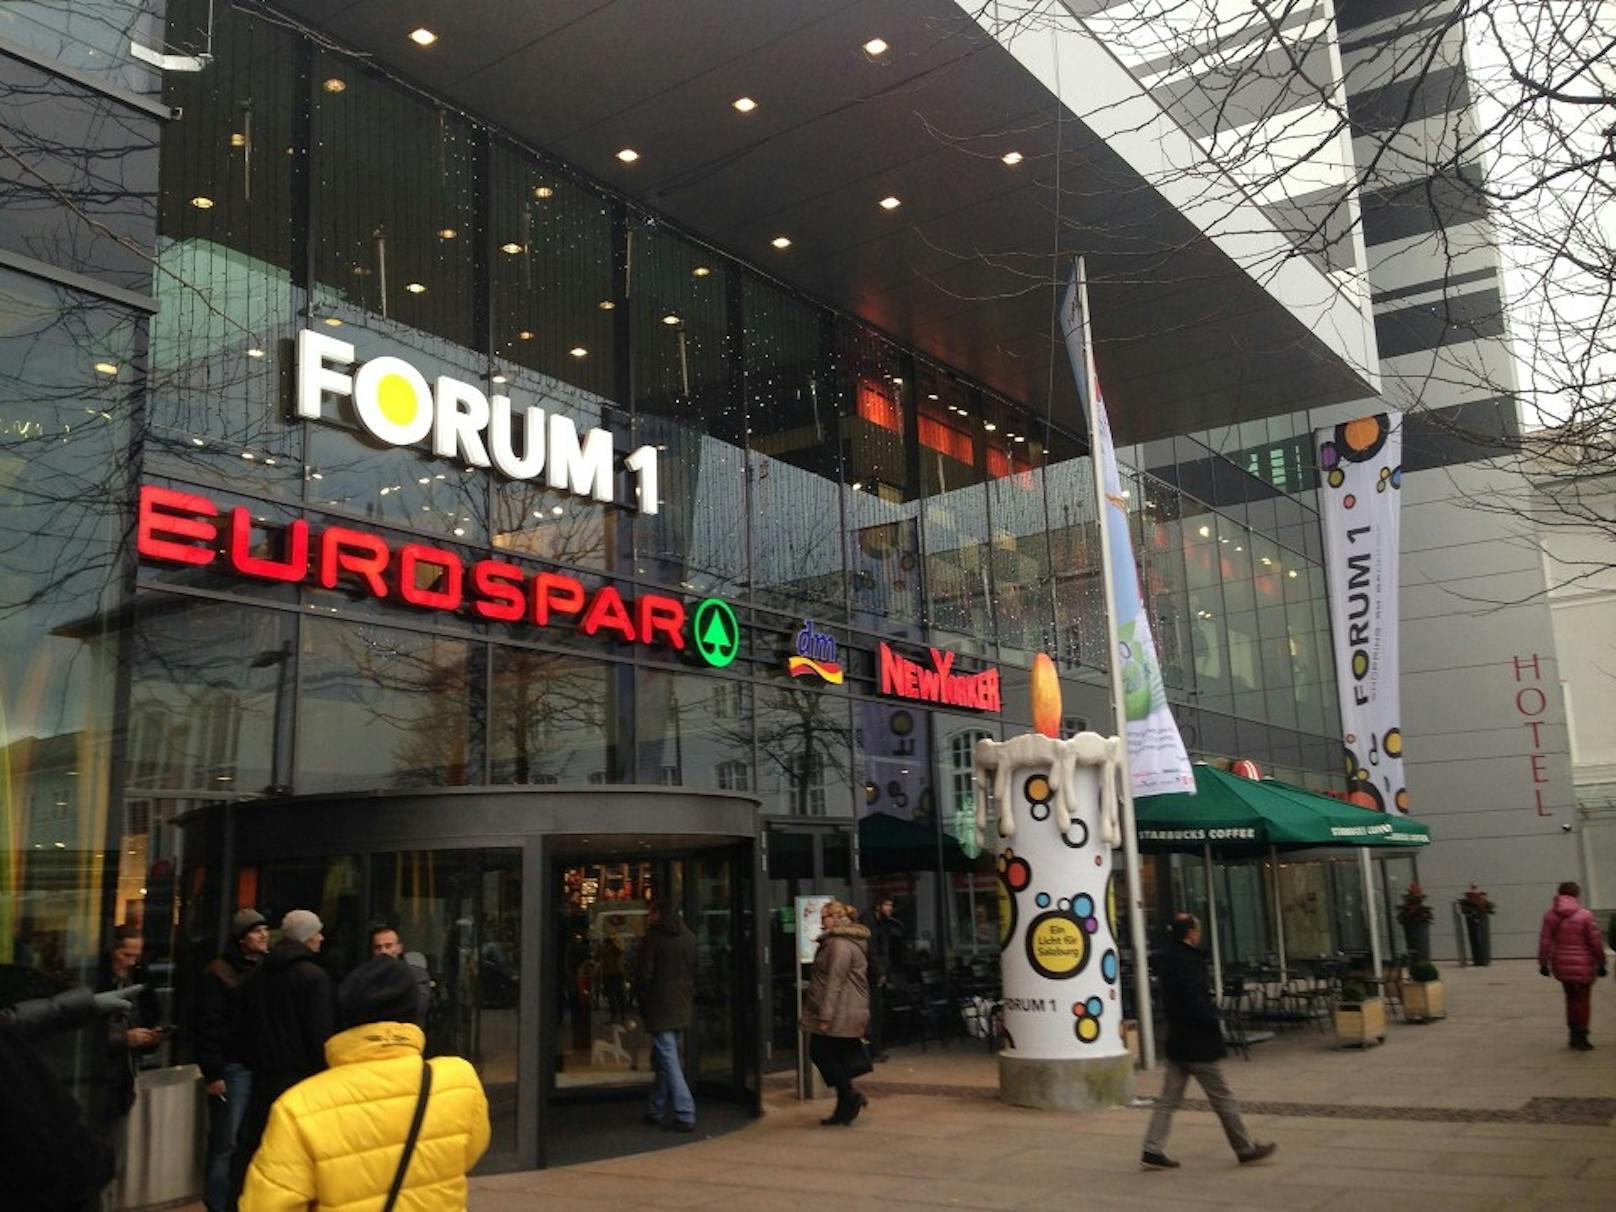 Eurospar im Forum 1 am Salzburger Hauptbahnhof